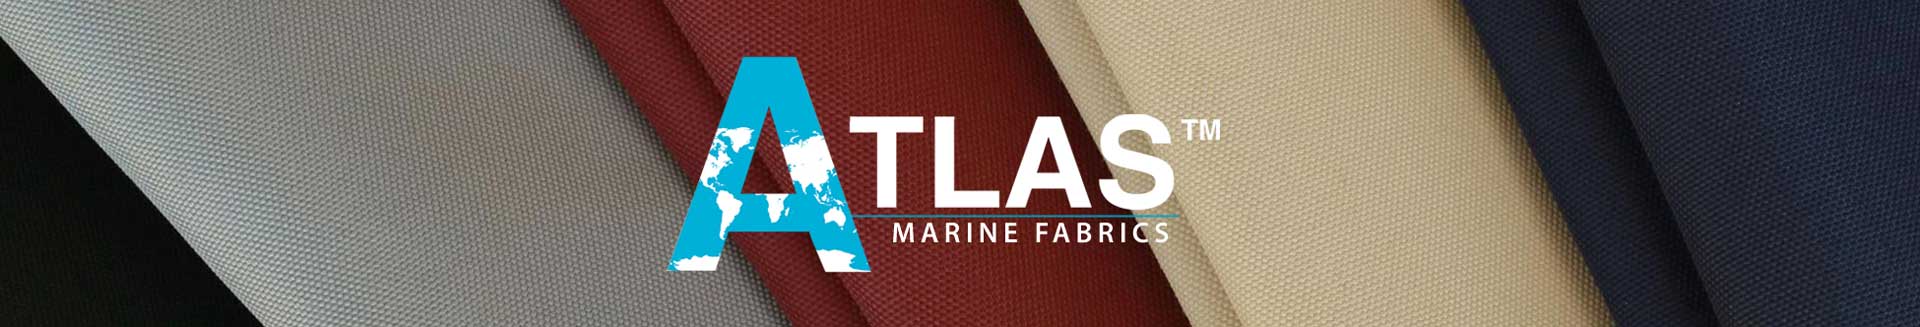 AtlasFabrics_w-logo